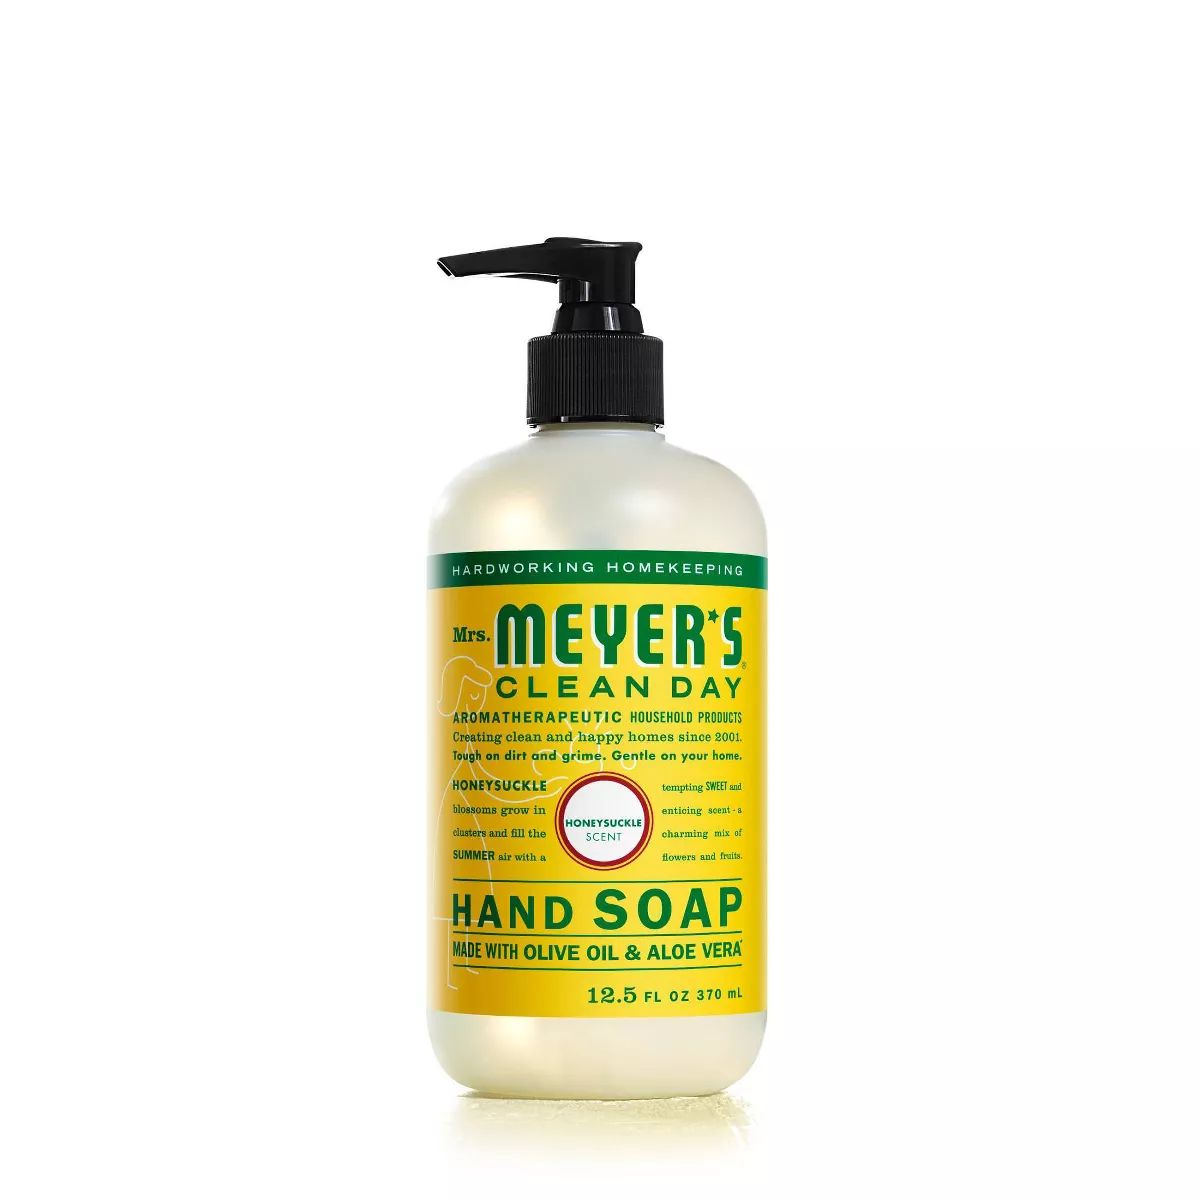 Mrs. Meyer's Clean Day Honeysuckle Liquid Hand Soap - 12.5 fl oz | Target